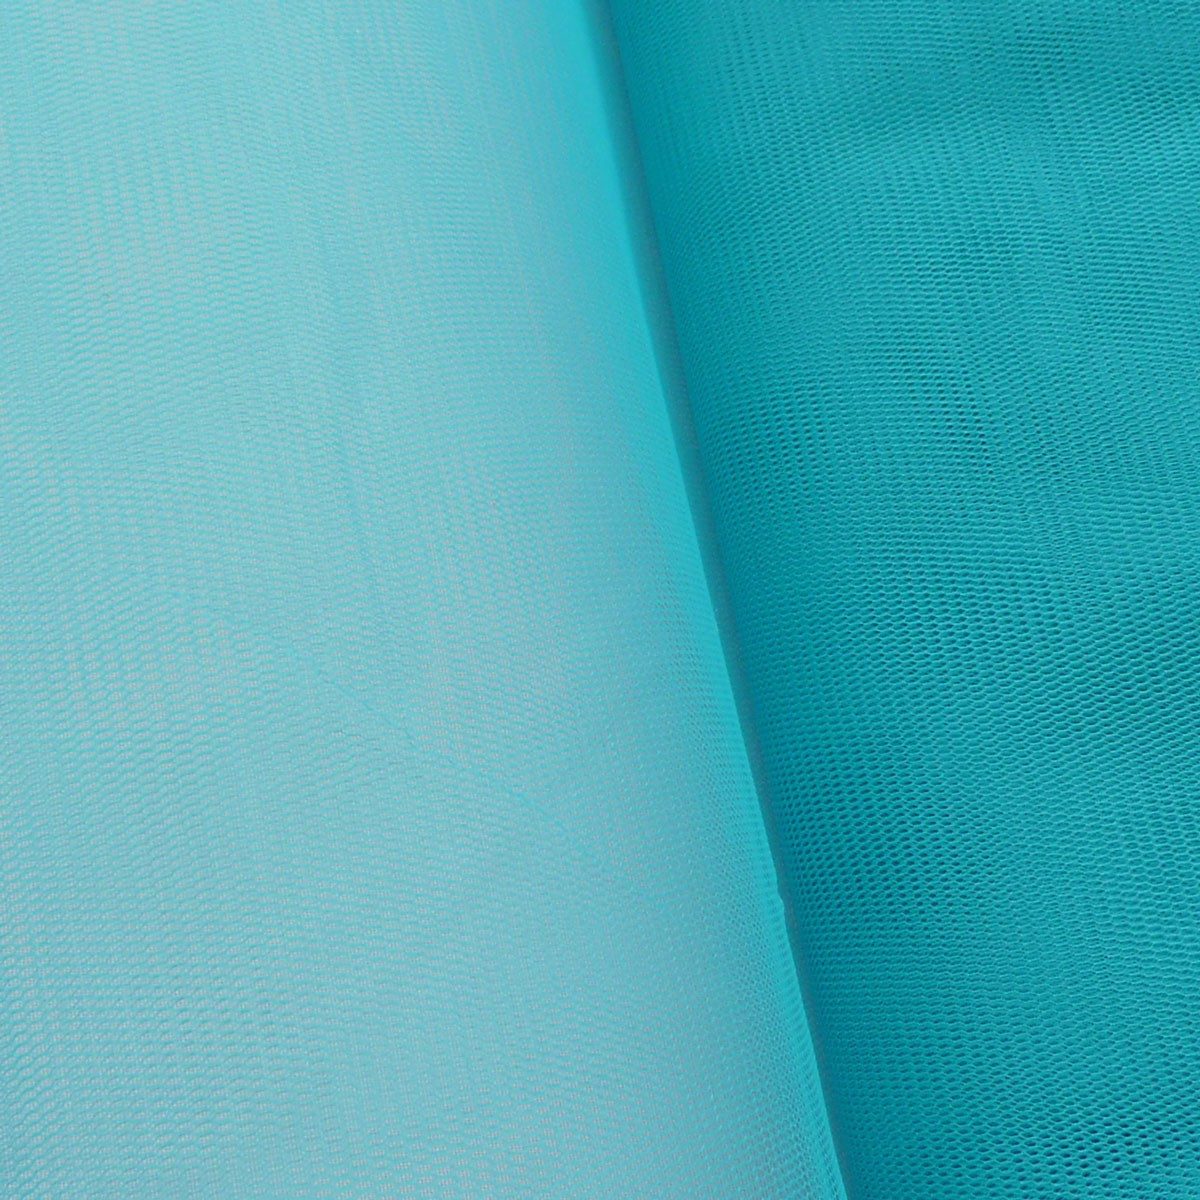 Stoff Kreativstoff Tüll Polyester türkis 1,4m Breite